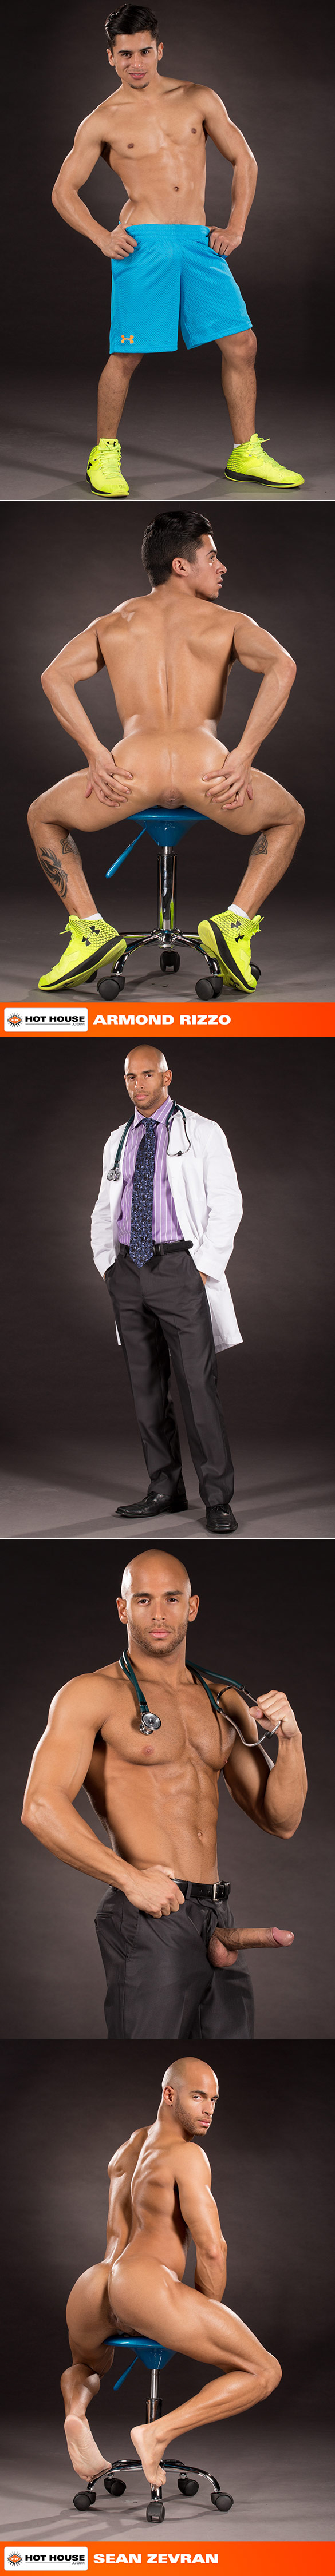 HotHouse: Sean Zevran pounds Armond Rizzo in "Hard Medicine"